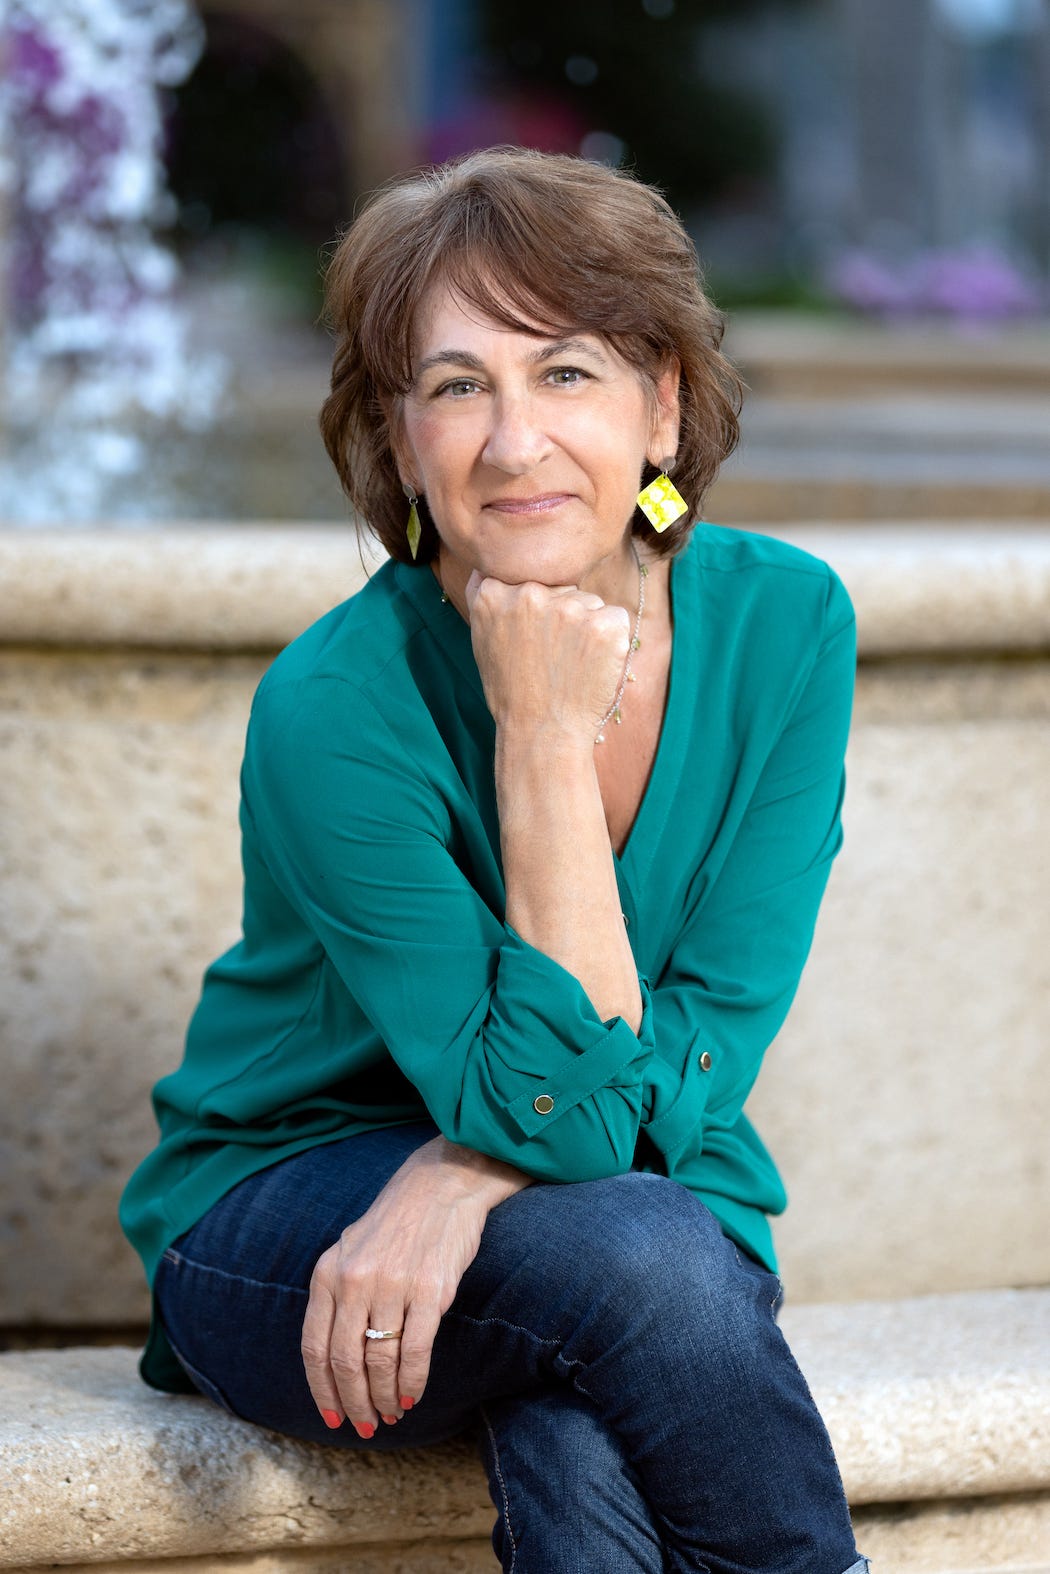 Author Kathy MacKay